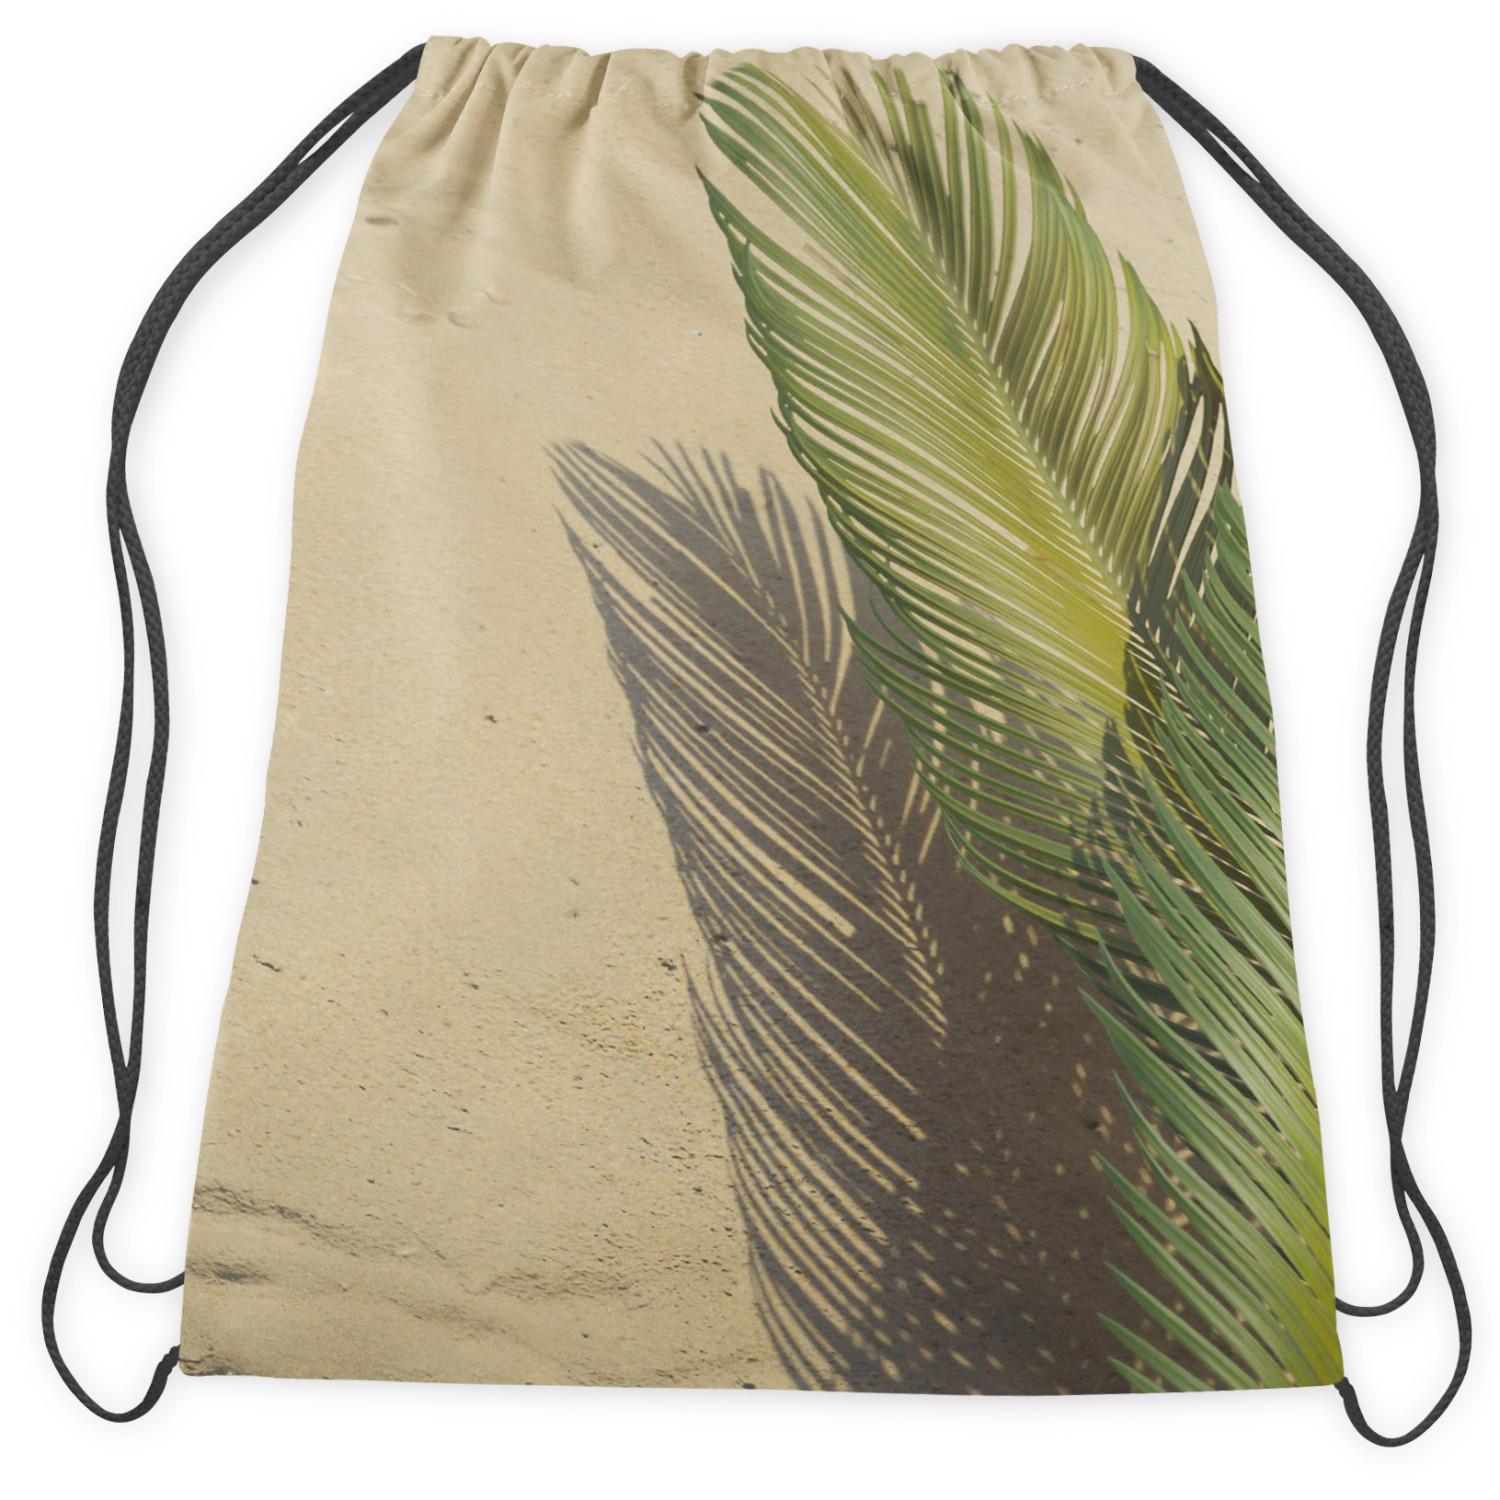 Mochila Palm shade - a minimalist floral composition on a sand background